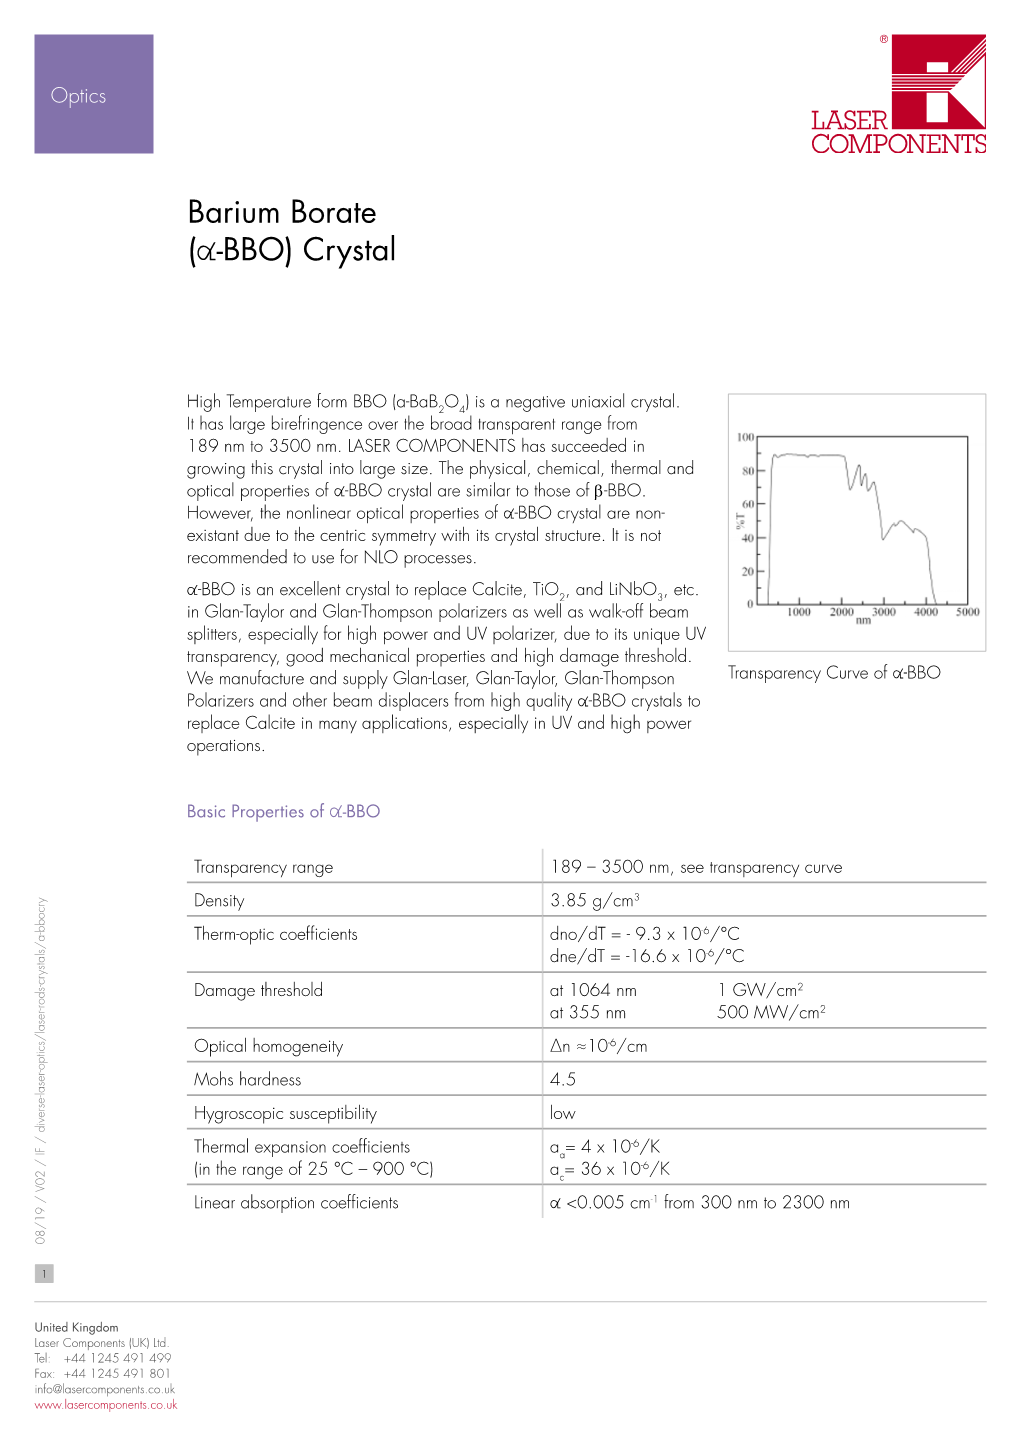 Barium Borate Crystal